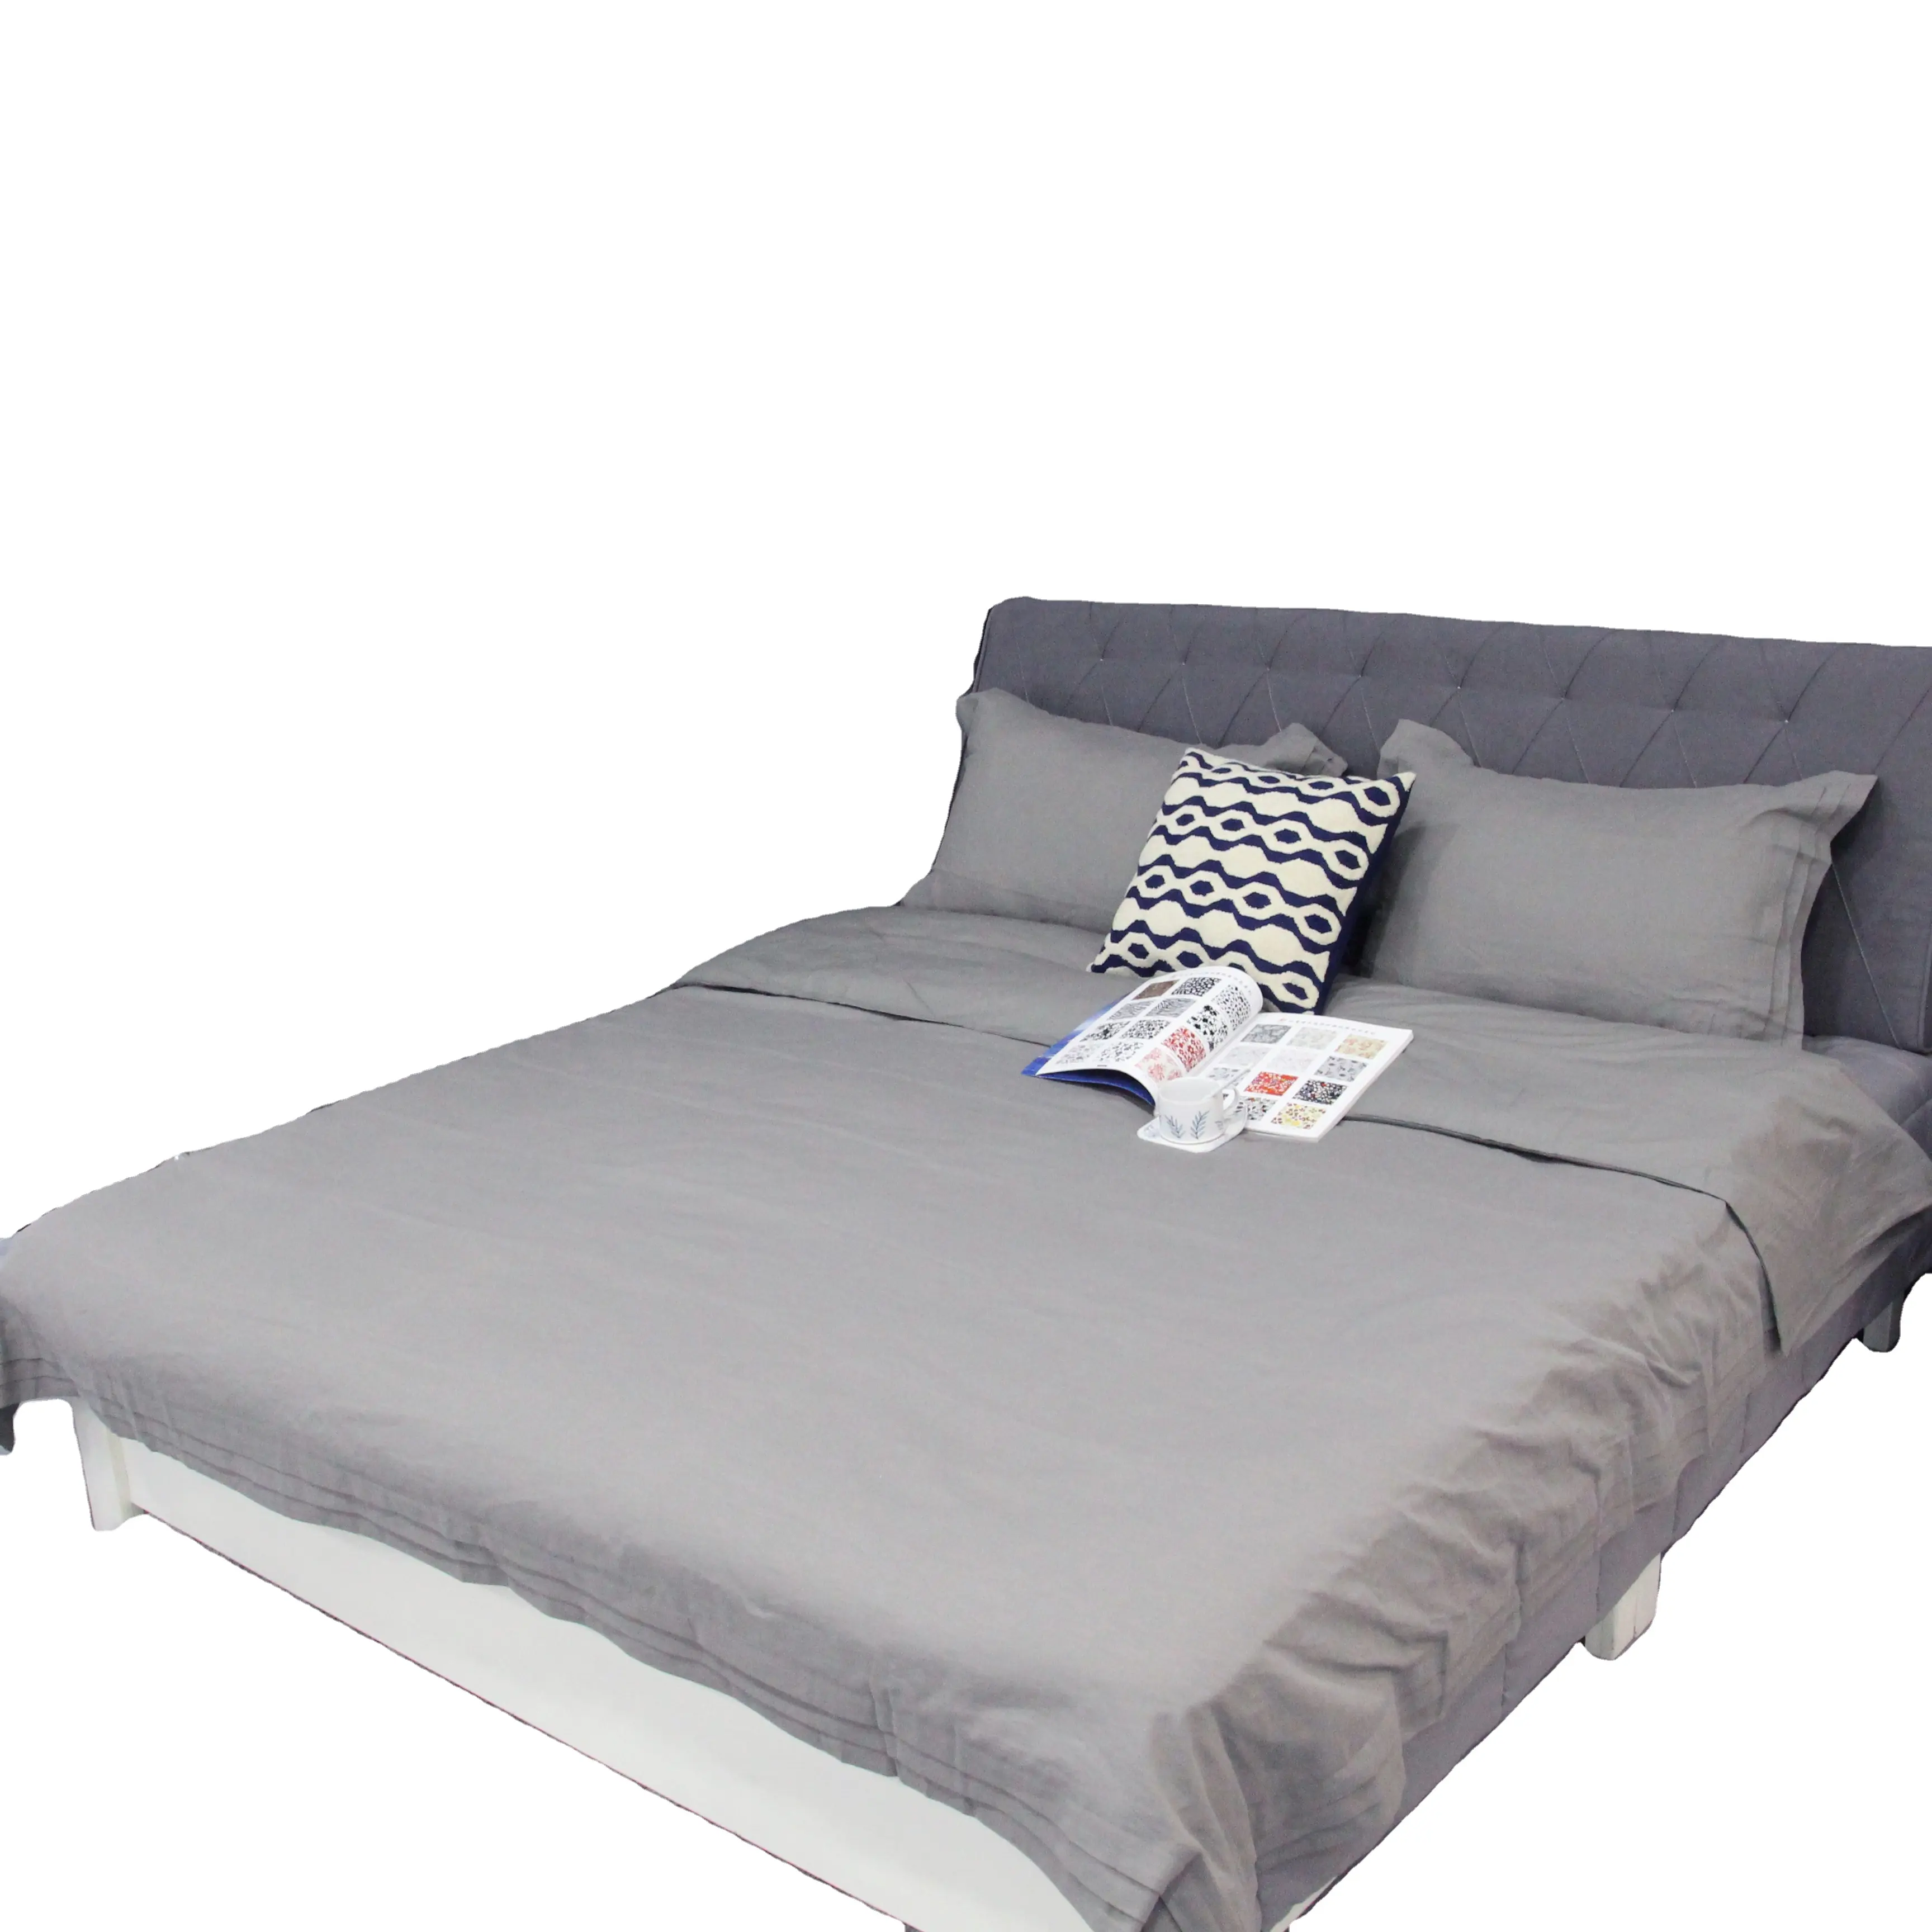 Großhandel Luxus Baumwolle Leinen Bettwäsche Set Seide Kissen bezug Bett bezug 6 Stück Bettlaken Bettwäsche Set